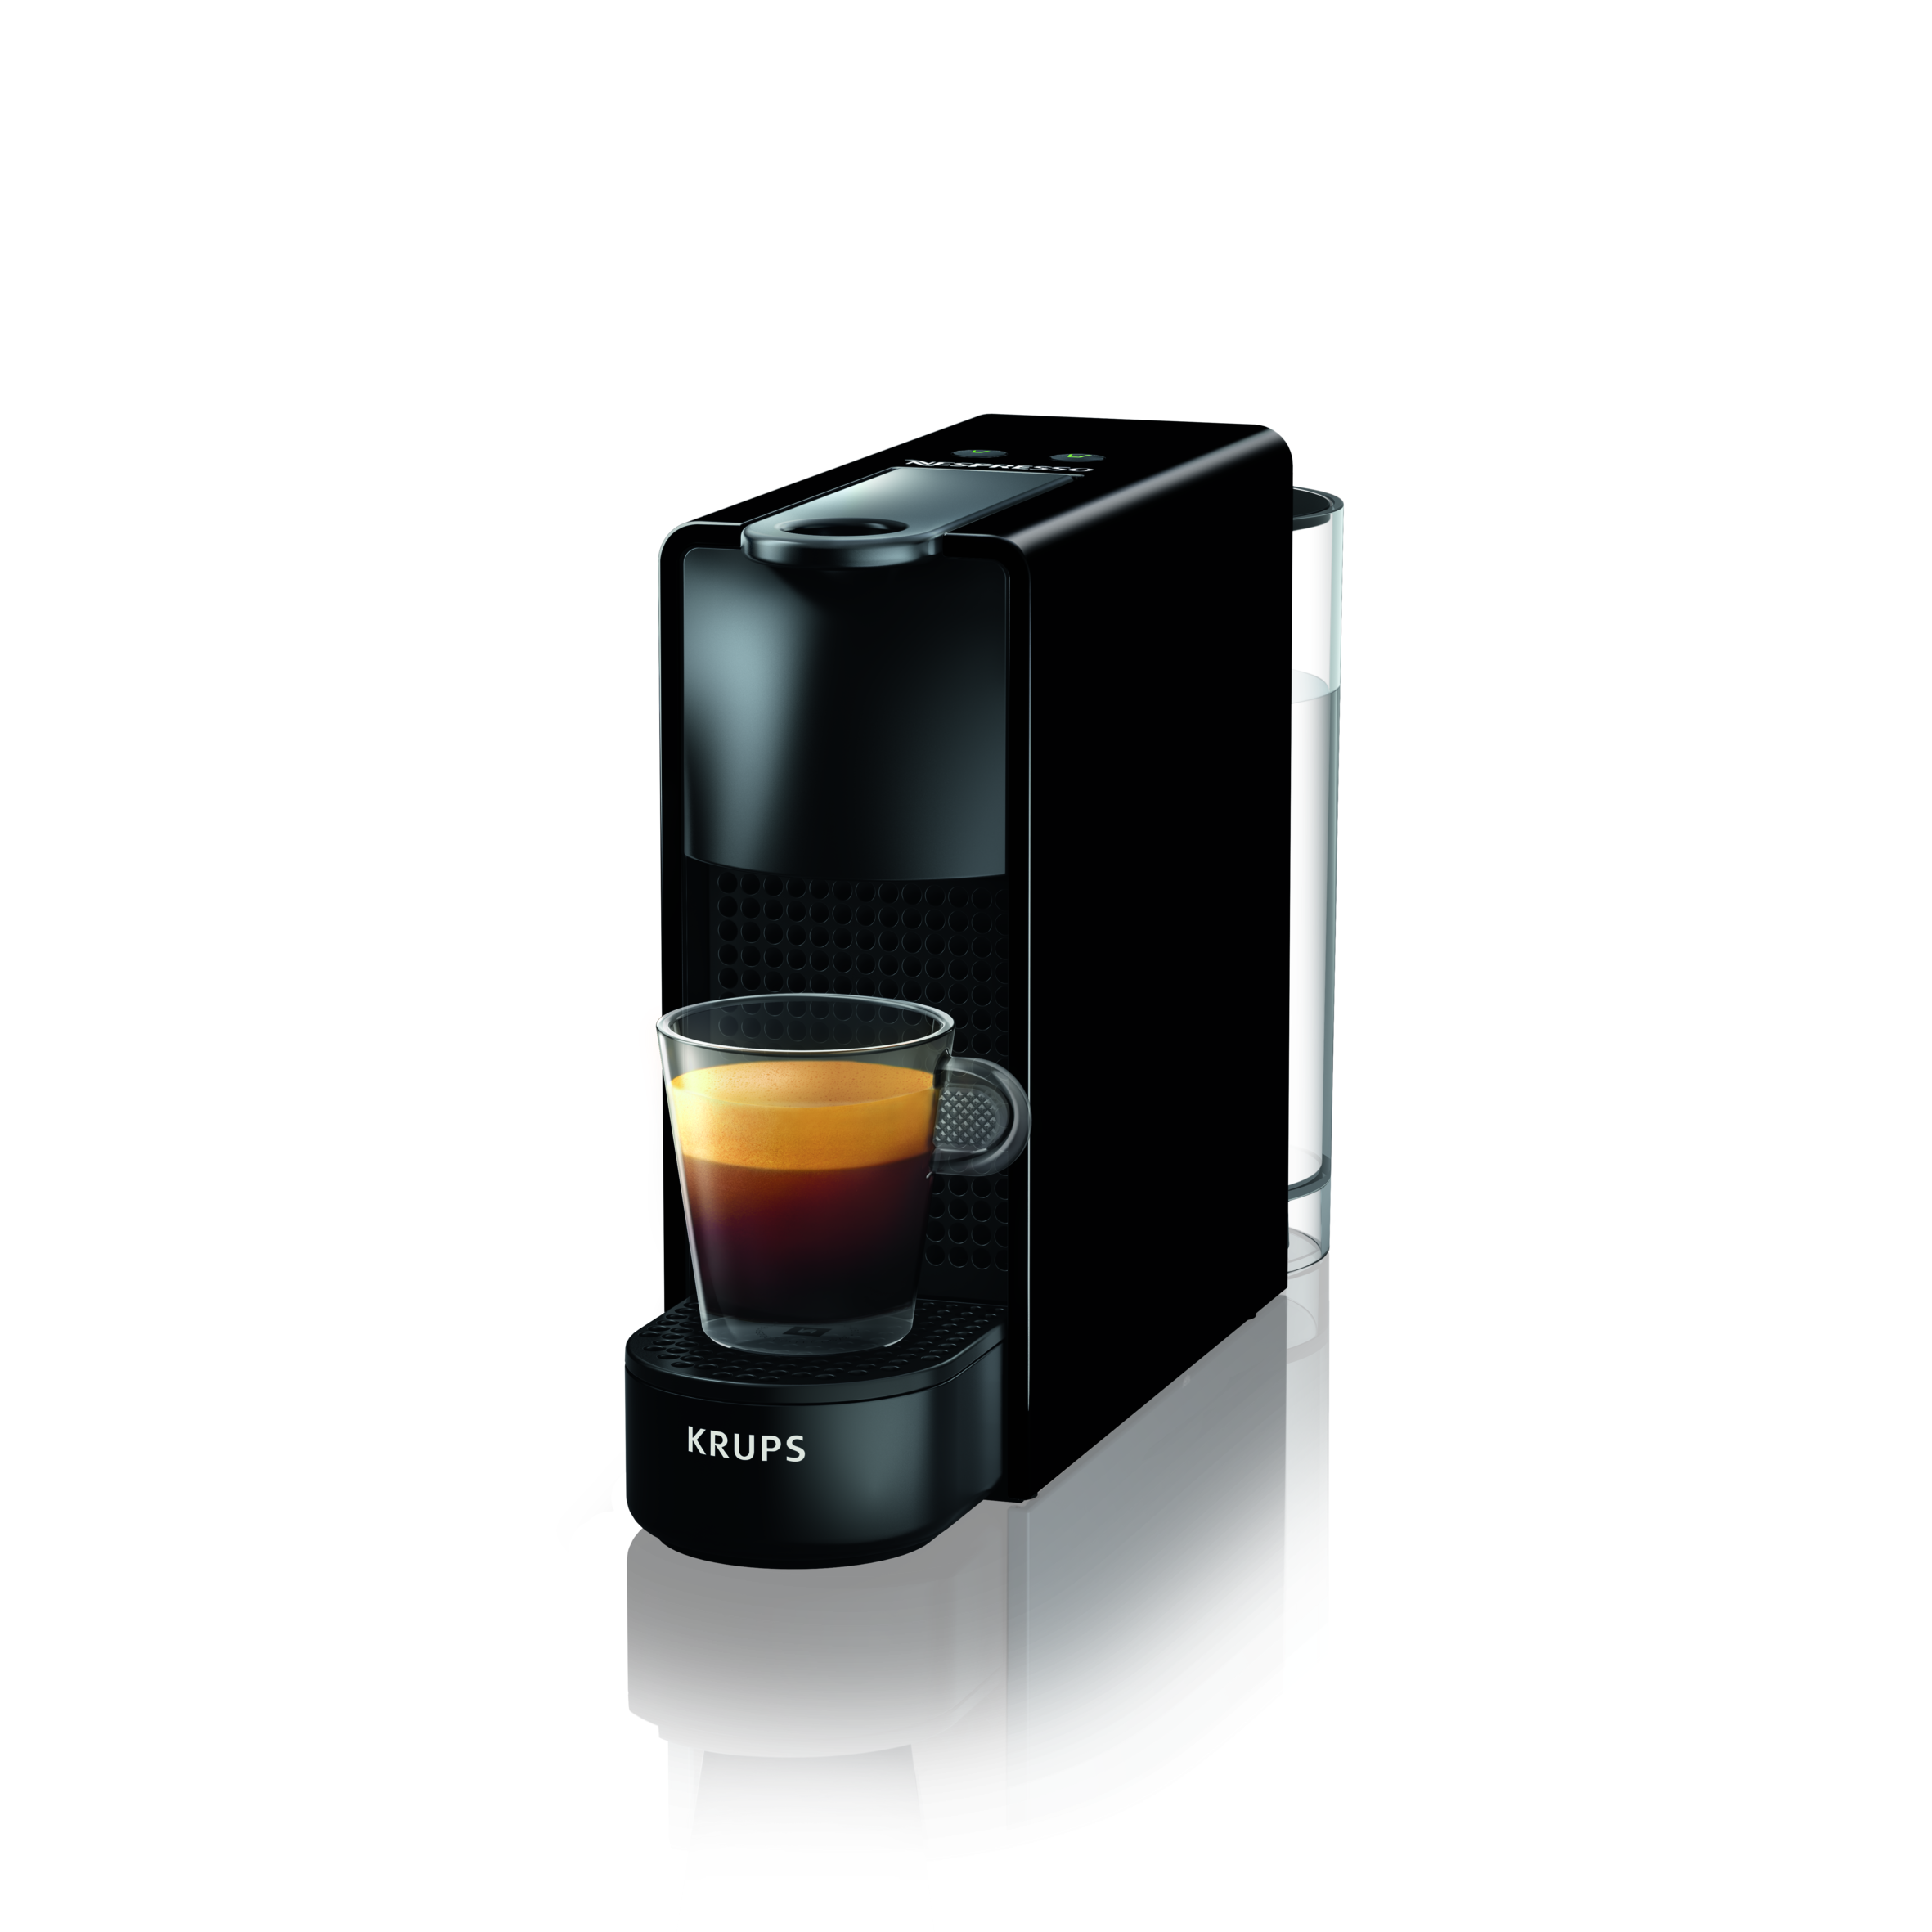 Cafetera Krups Essenza mini negra xn1108 nespresso 19 bar de xn1108pr5 monodosis compacta apagado color pack bienvenida incluido xn1108p2